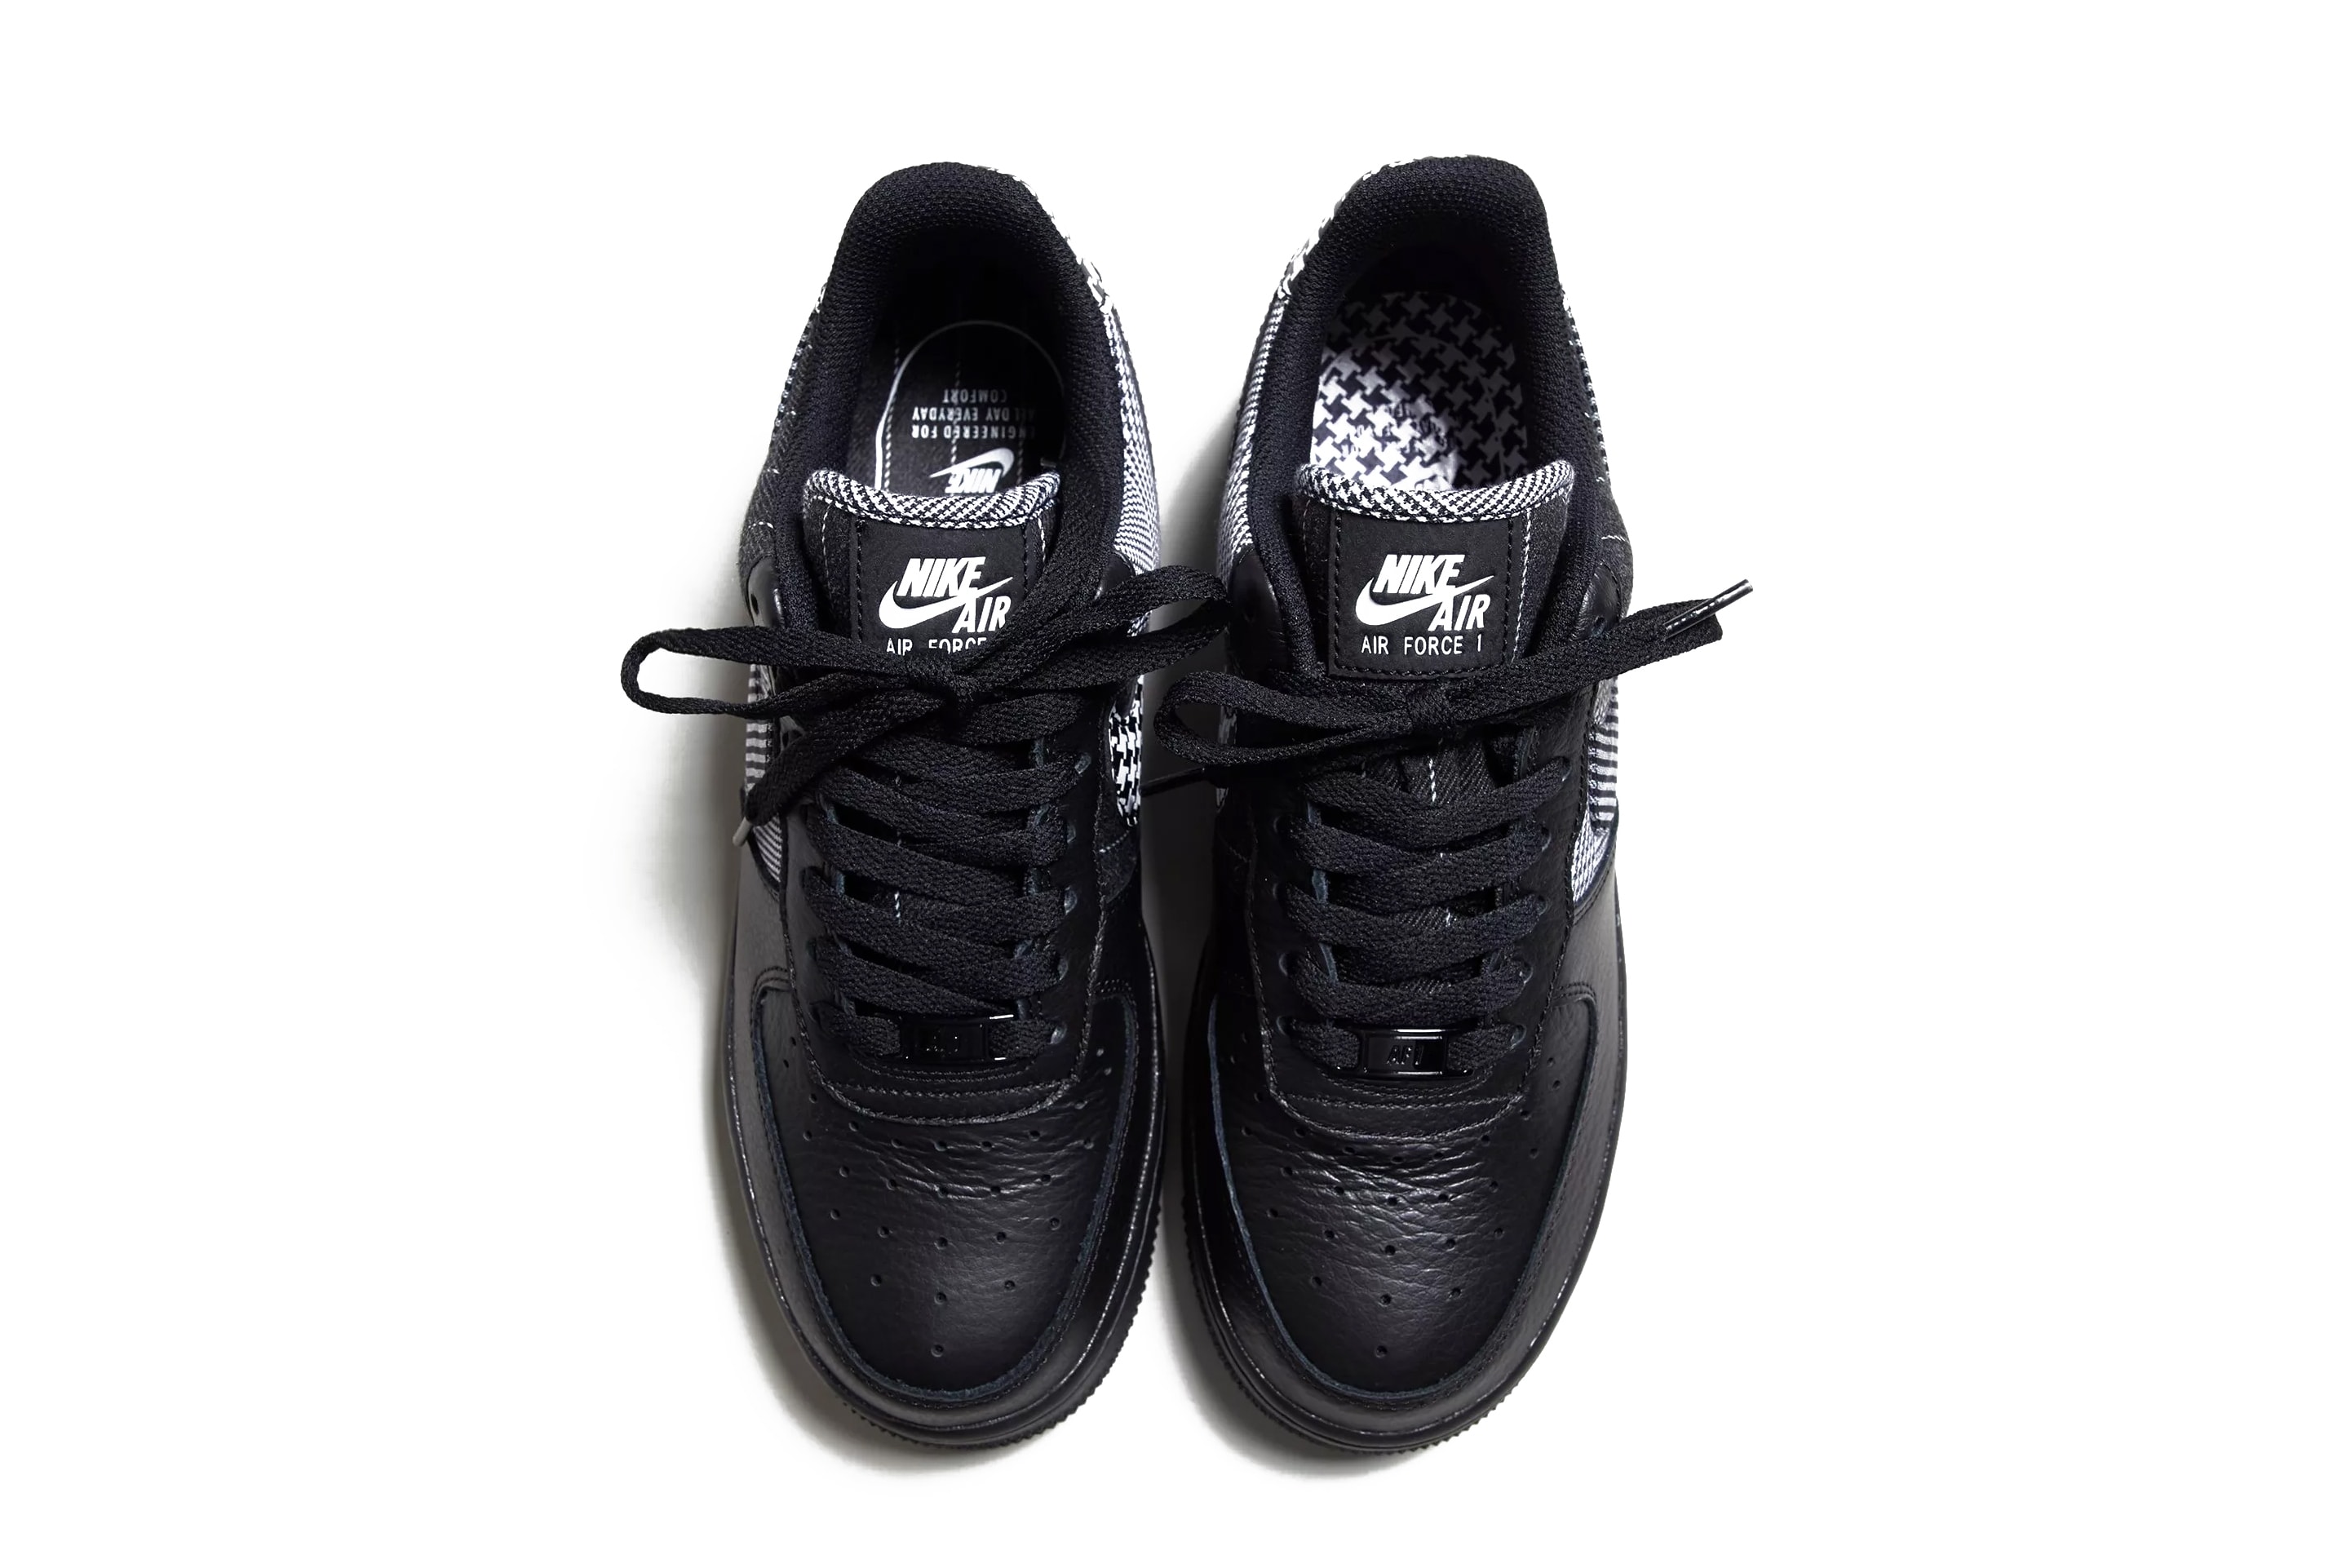 Nike Air Force 1 Sneaker Shoe Black White Dogtooth Print